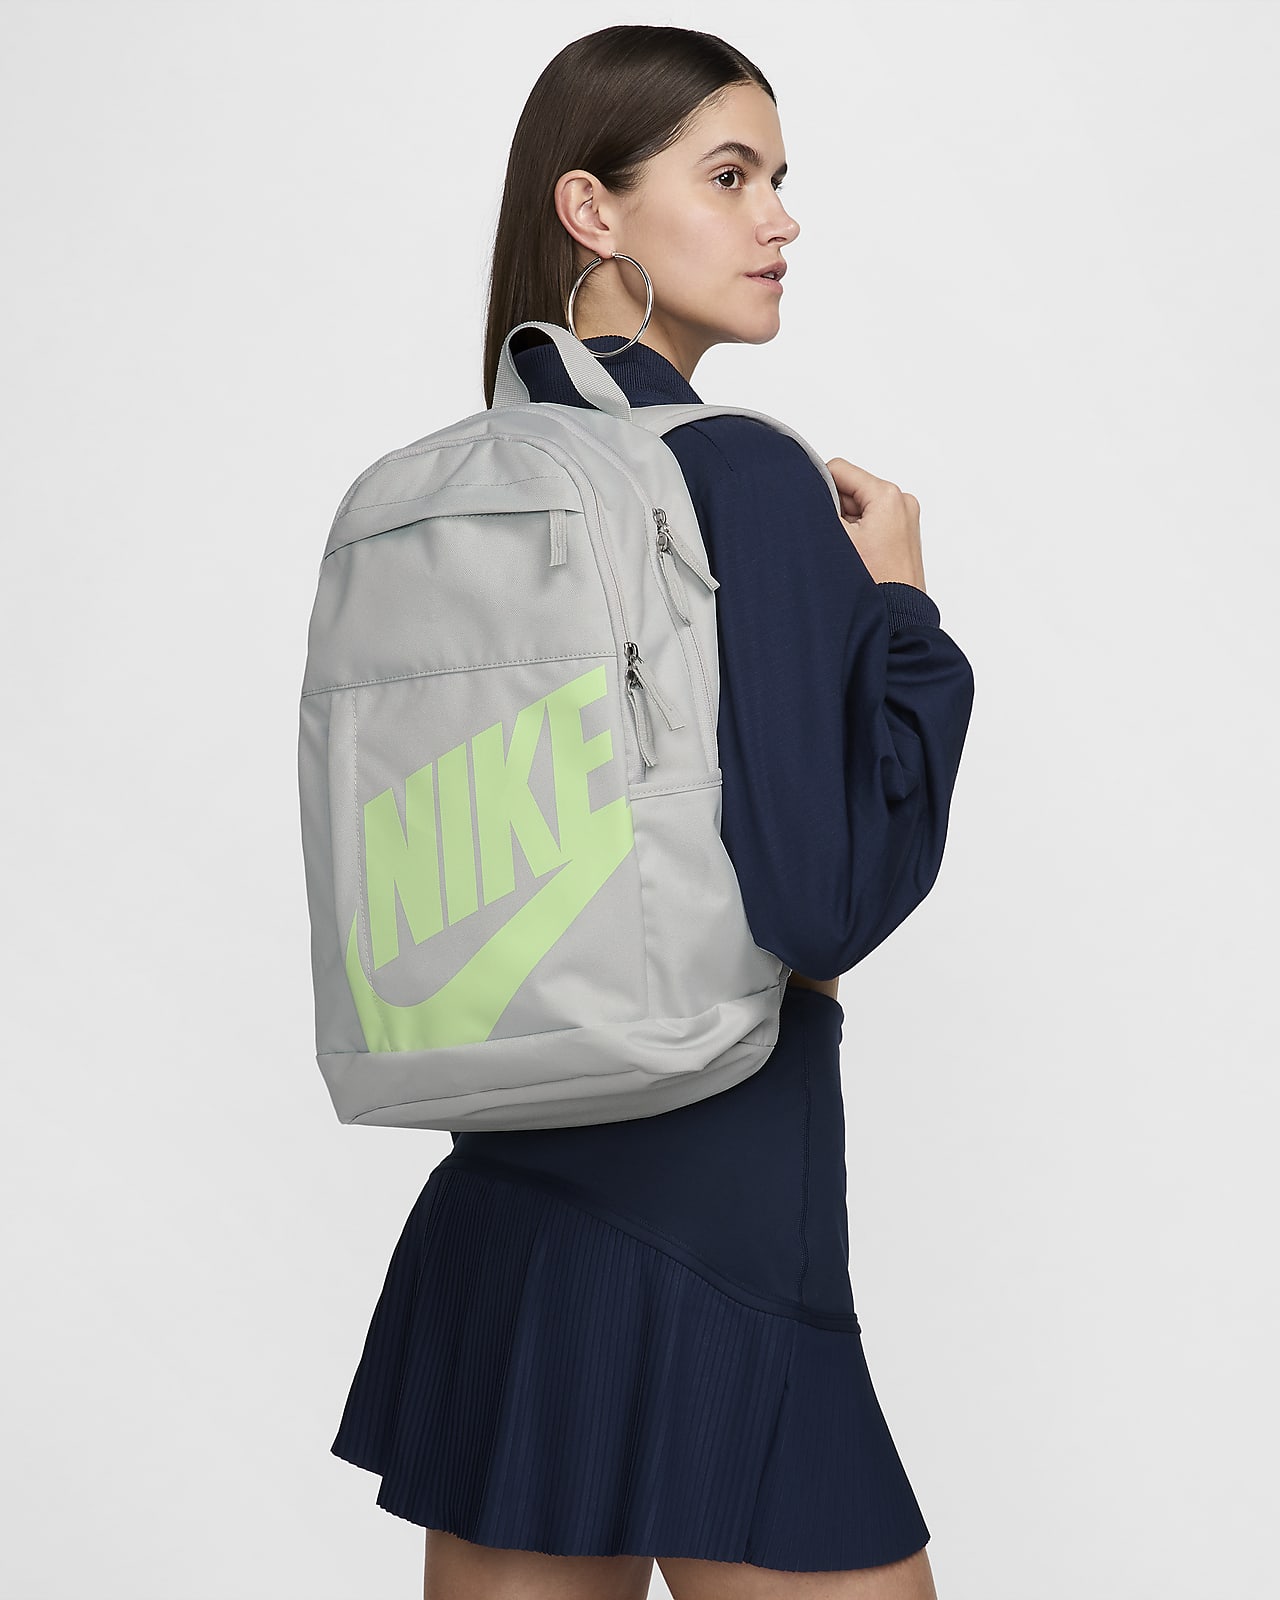 Nike-rygsæk (21 liter)